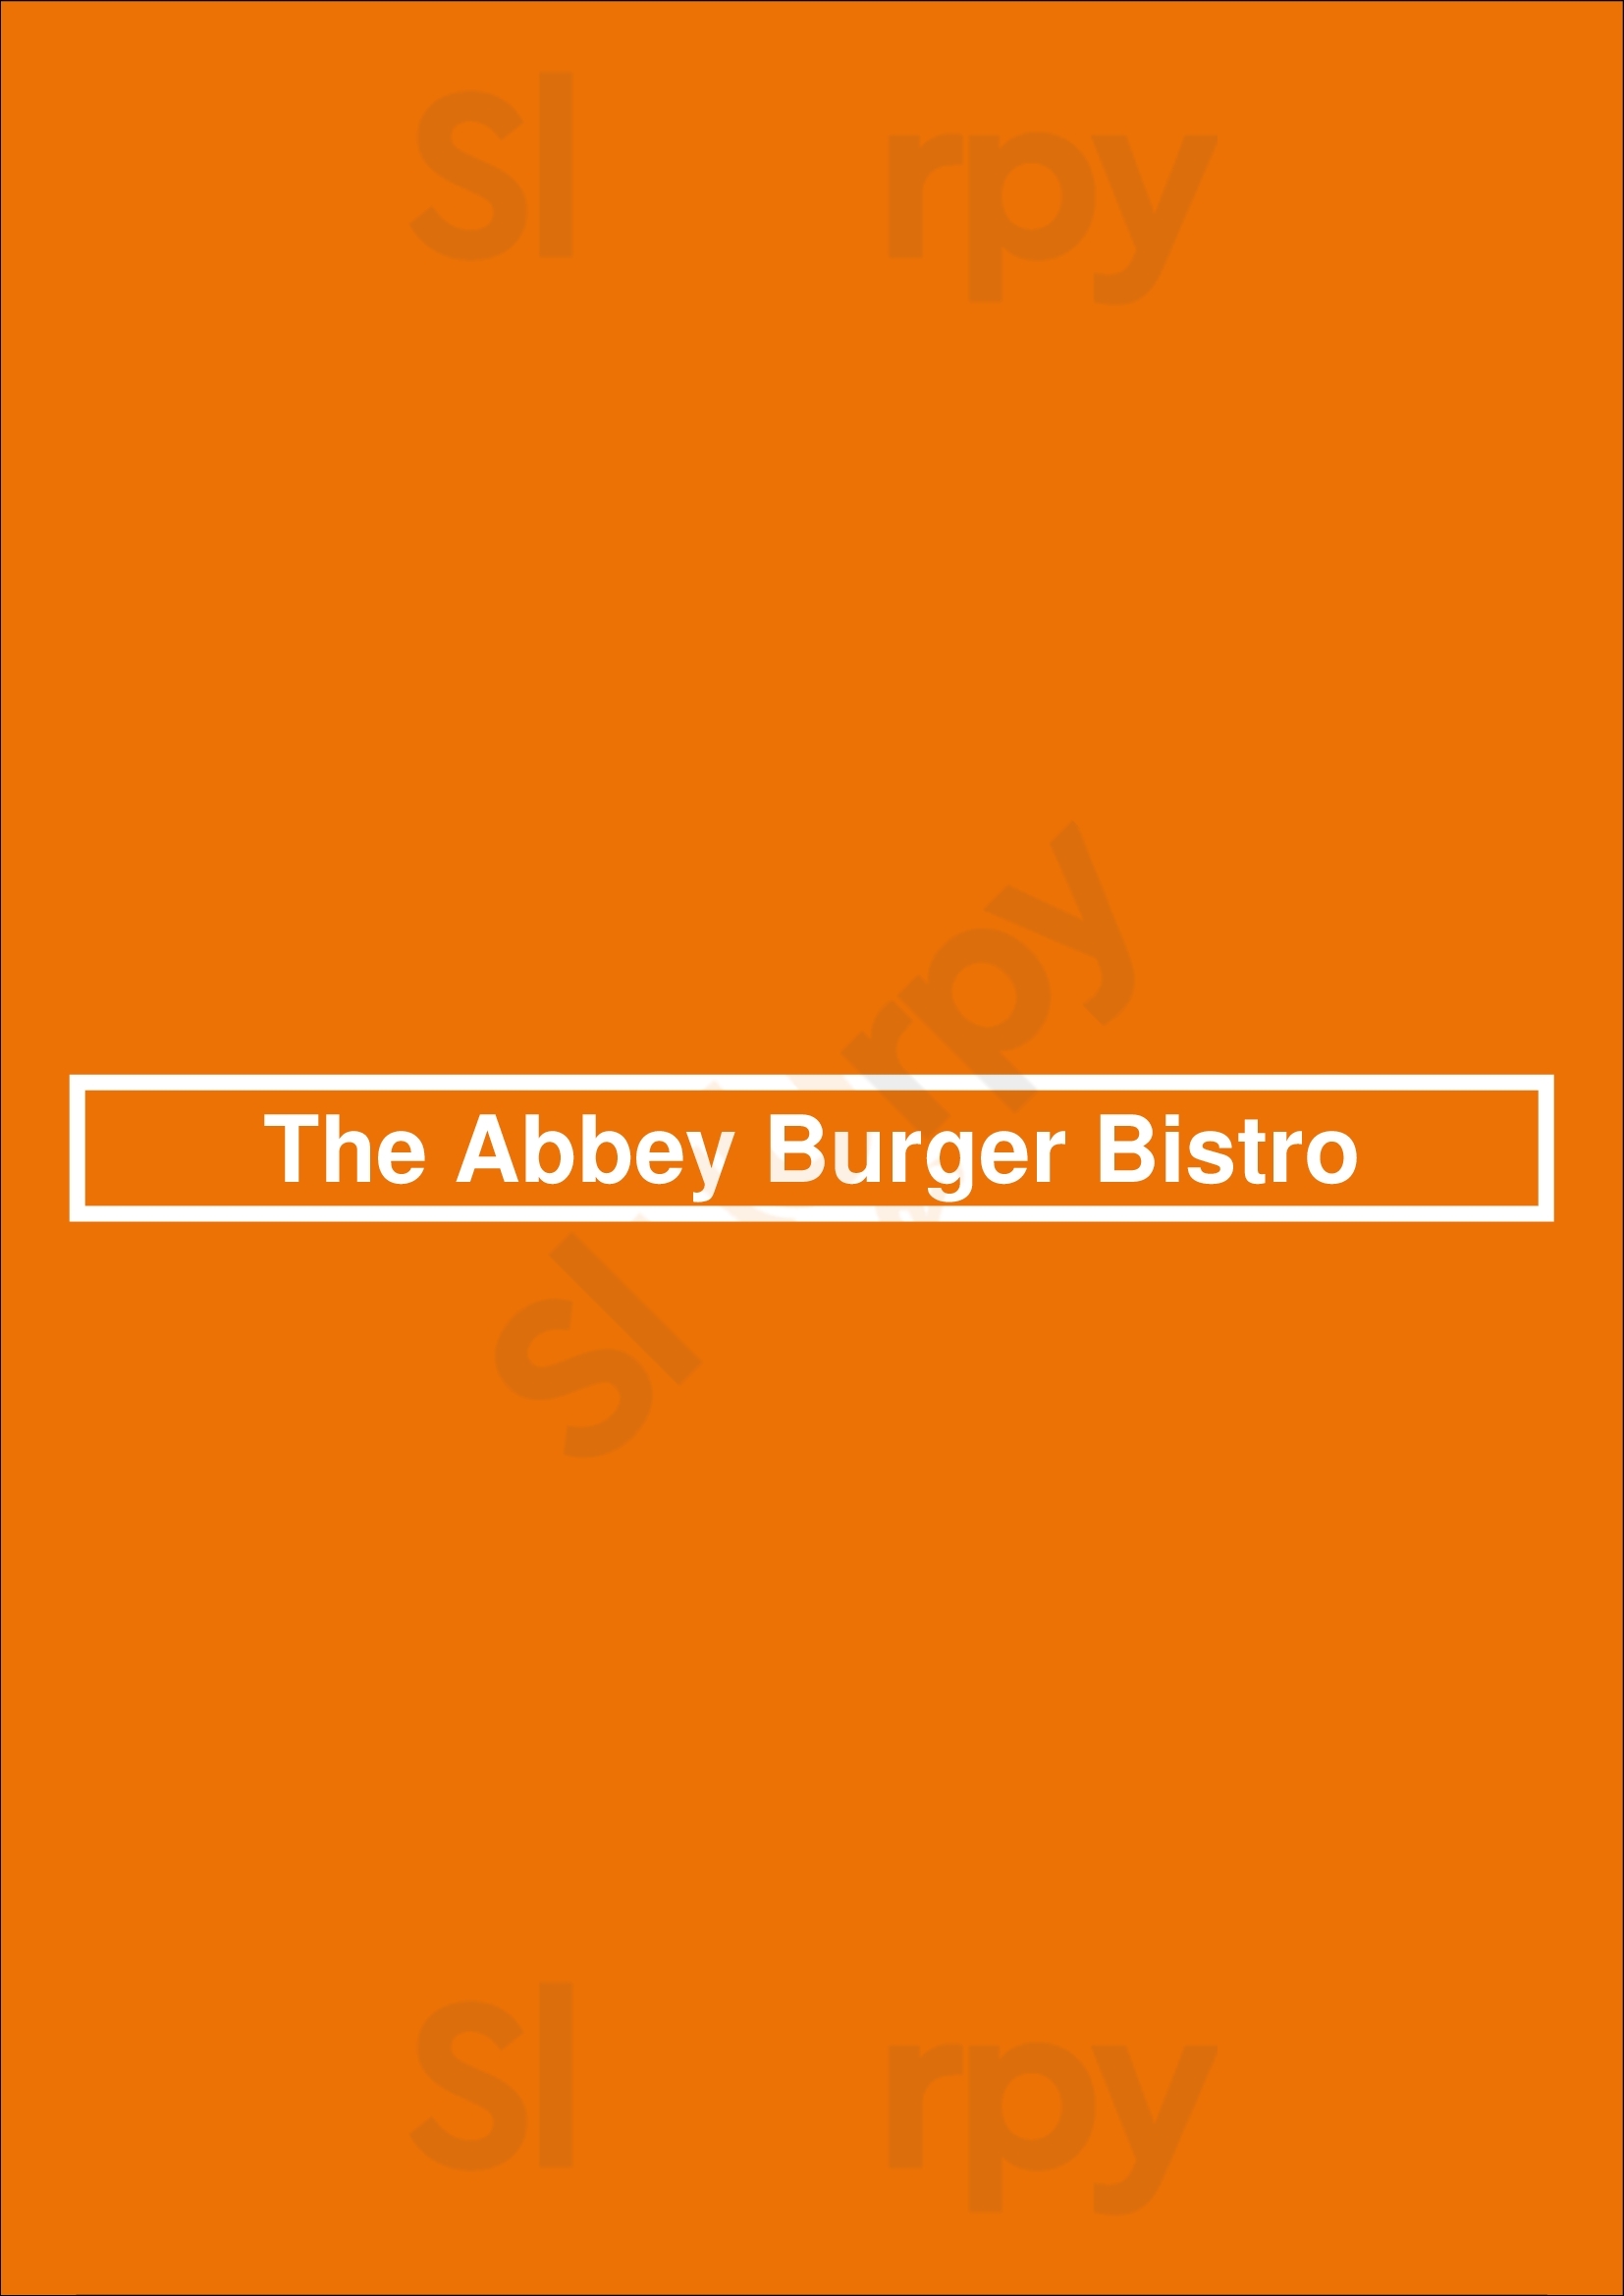 The Abbey Burger Bistro Baltimore Menu - 1